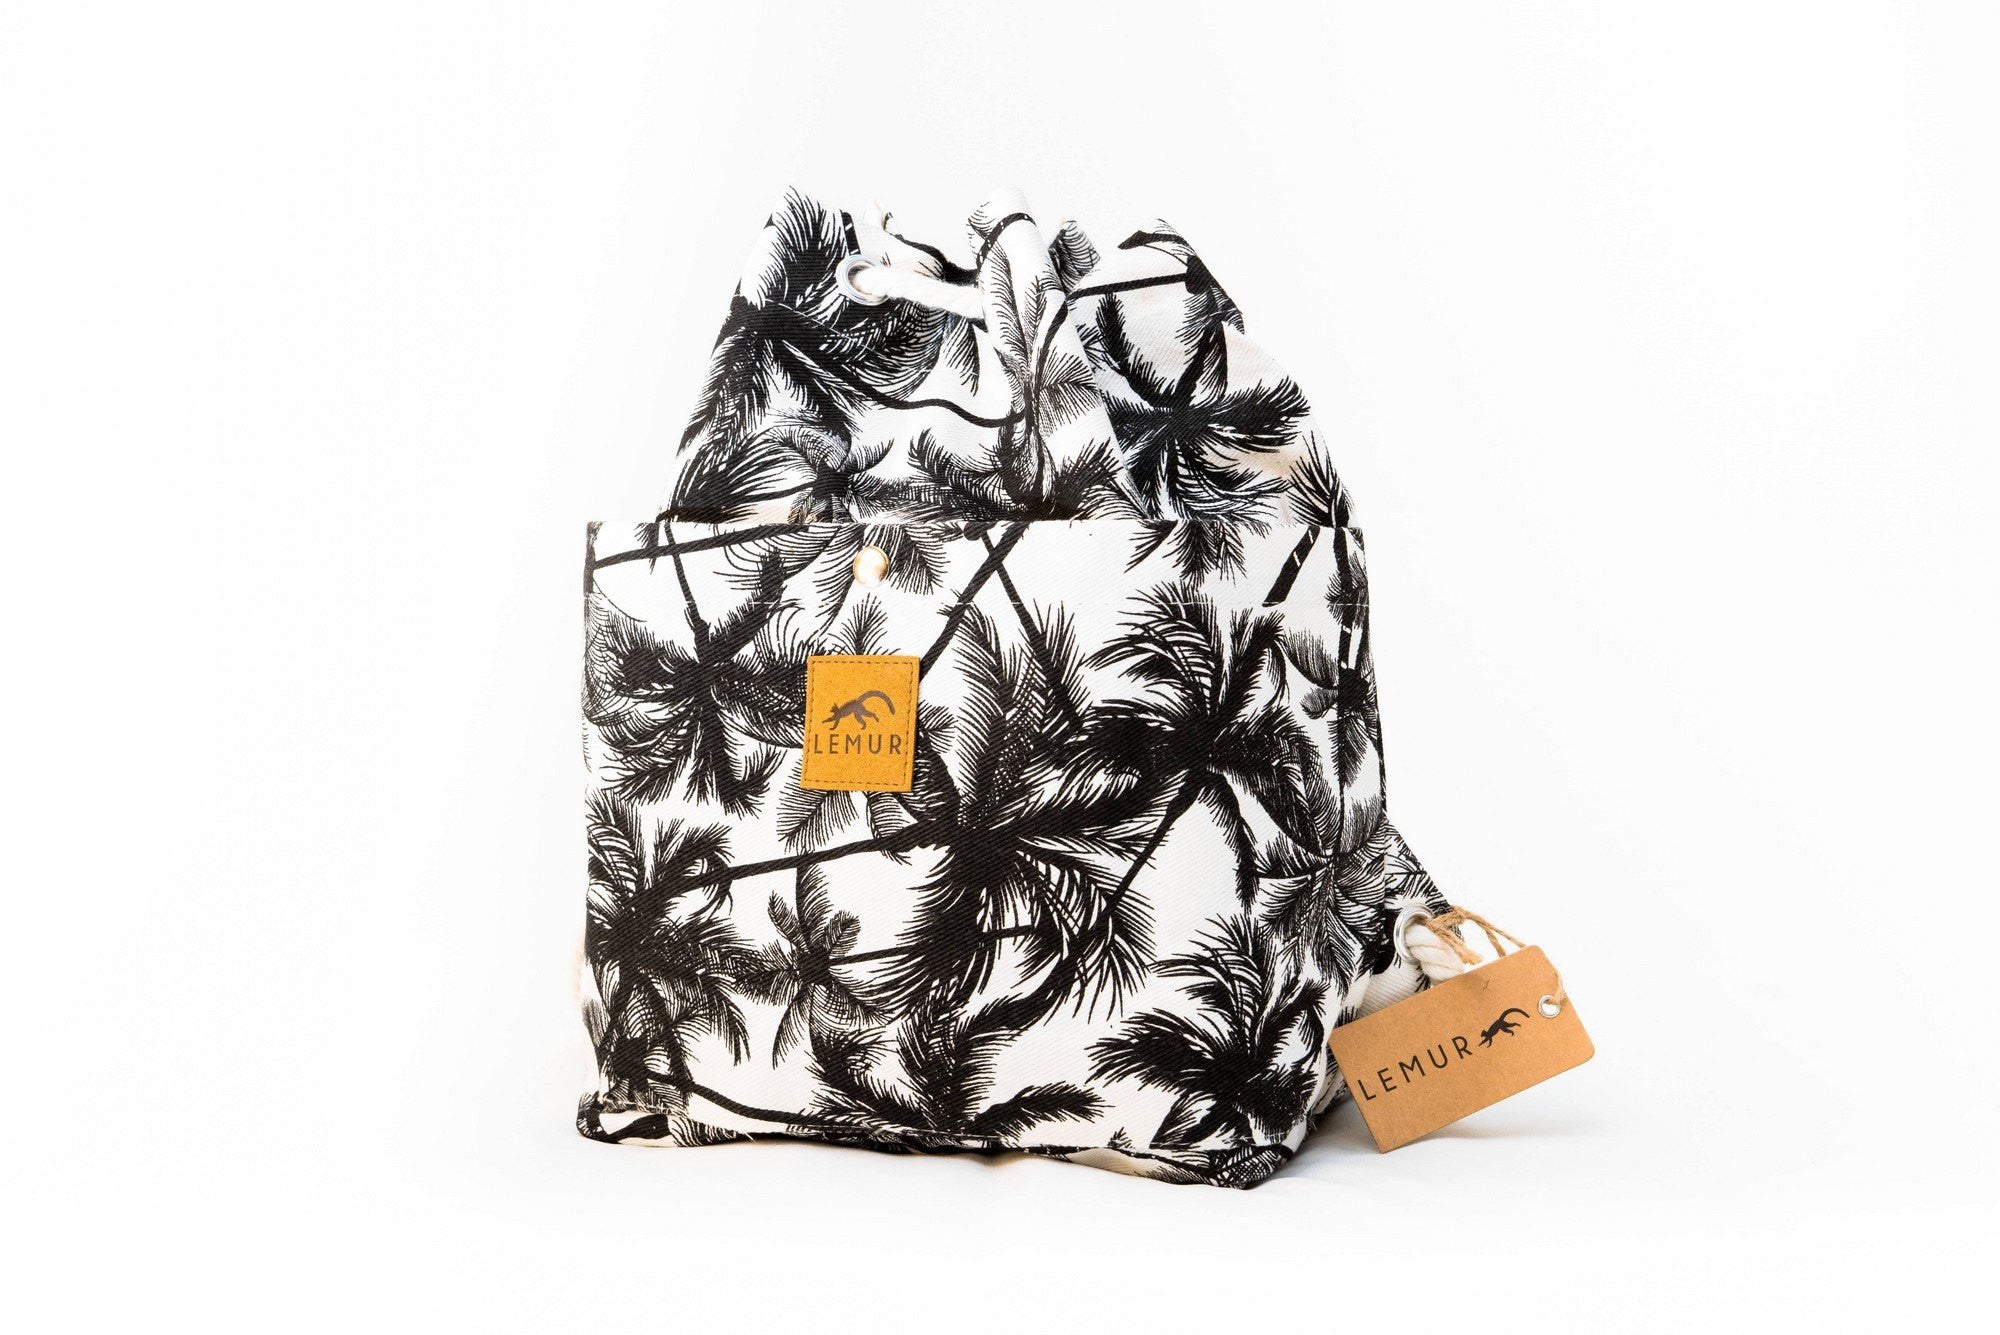 Canvas Travel Daypack - Canvas Travel Daypack - Rope Drawstring Cinchsack By Lemur Bags (Tropical Palm)